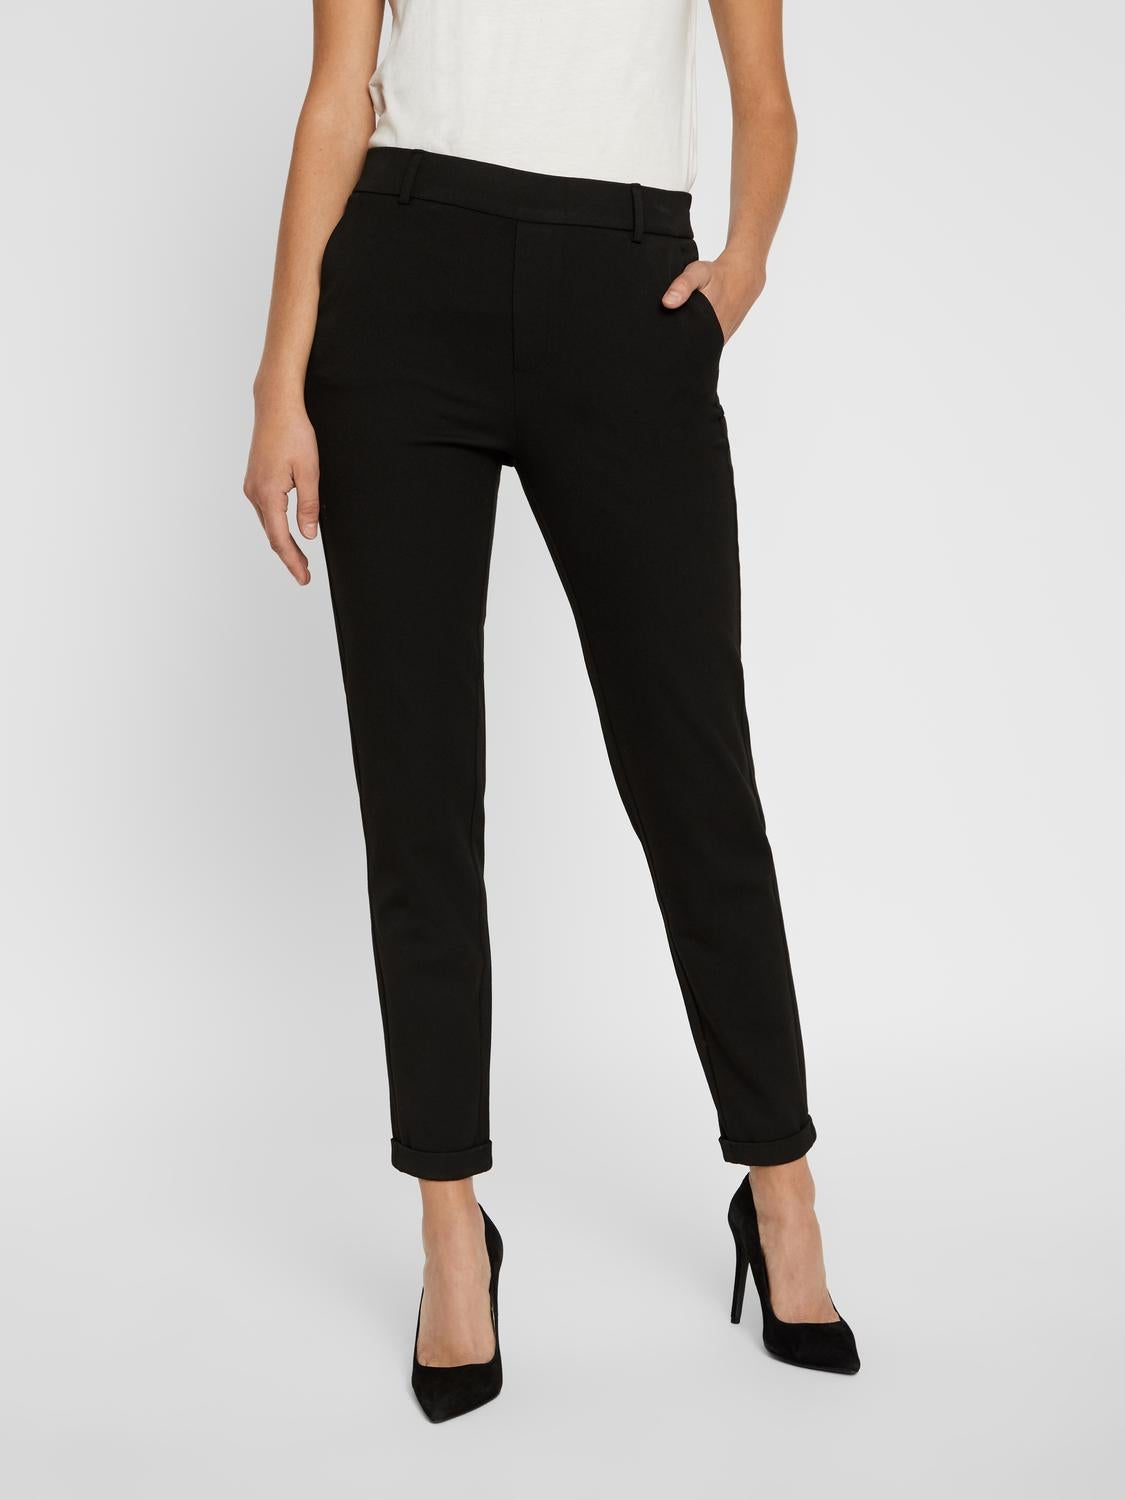 2 Pack Womens High Waisted Trousers White Black Beige Petite Work Pants   eBay